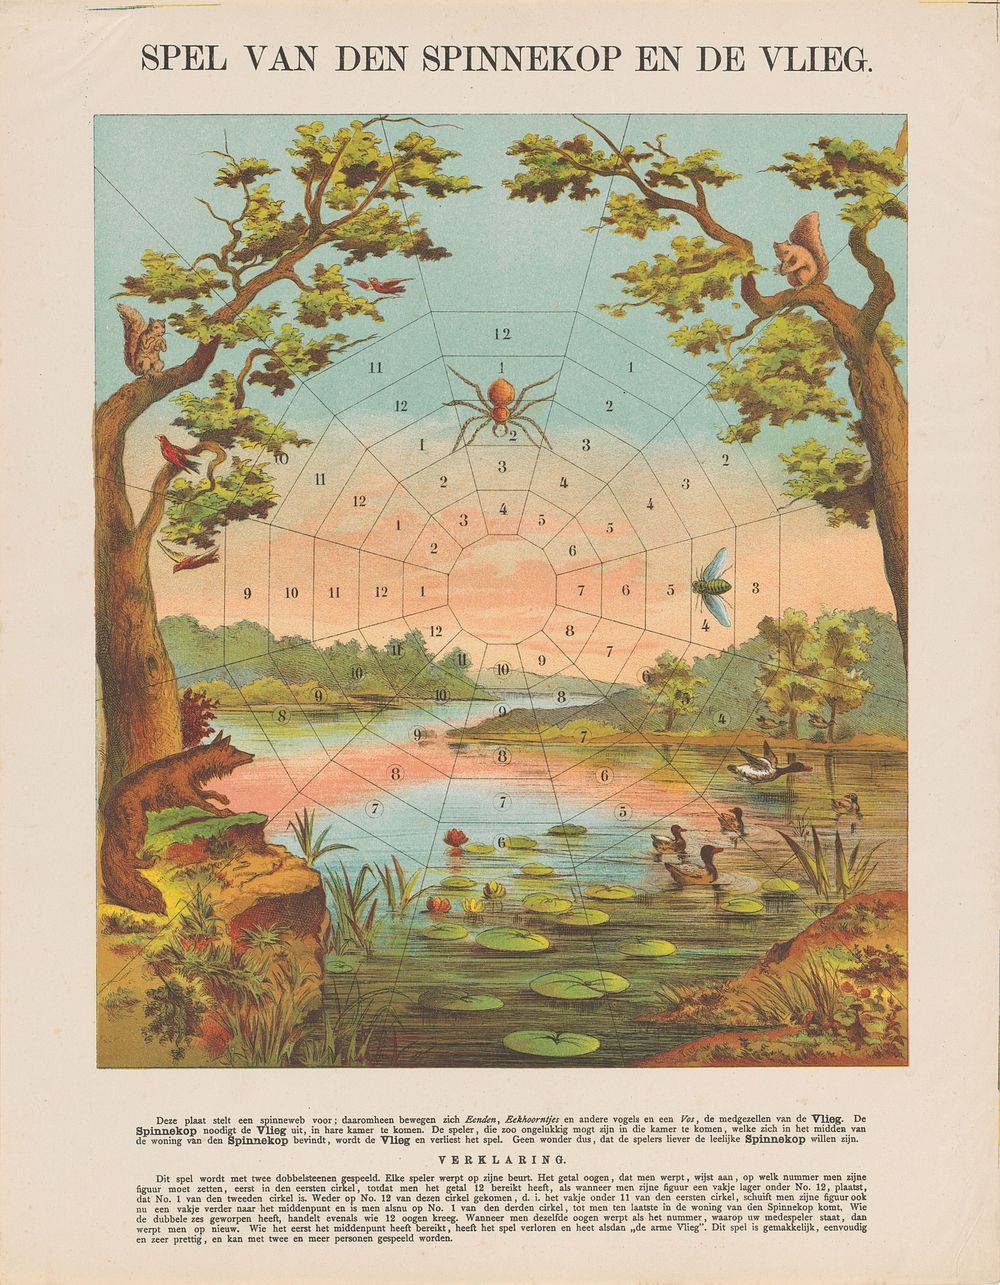 Spel van den spinnekop en de vlieg (1870 - 1899) by anonymous and anonymous